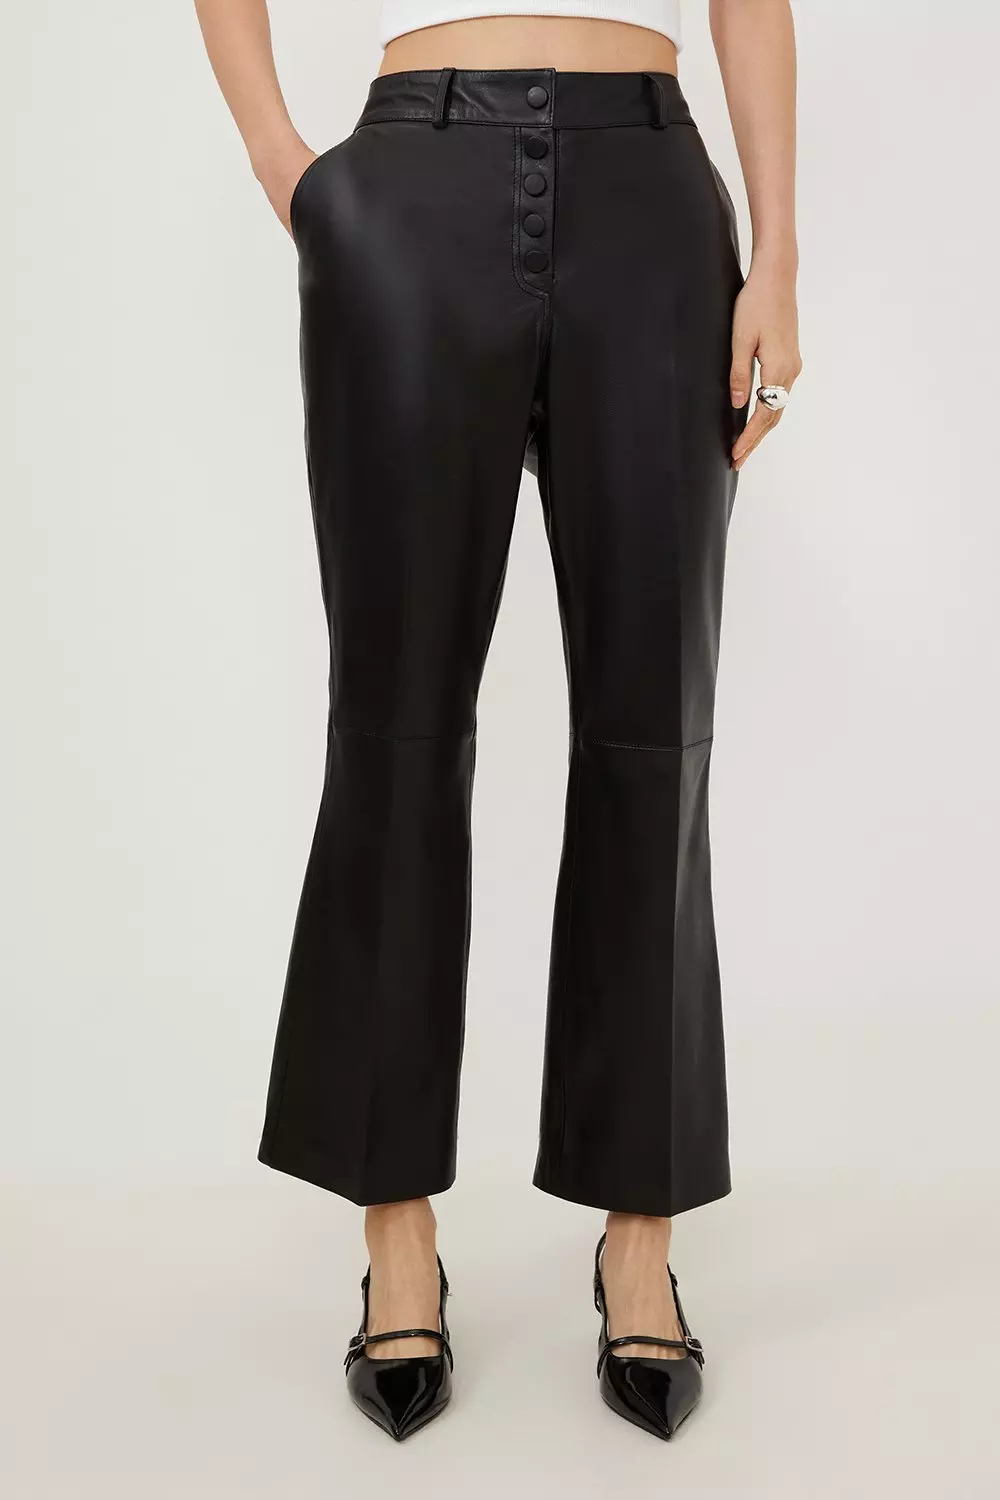 KAREN MILLEN Petite Leather Button Detail Trouser in Black